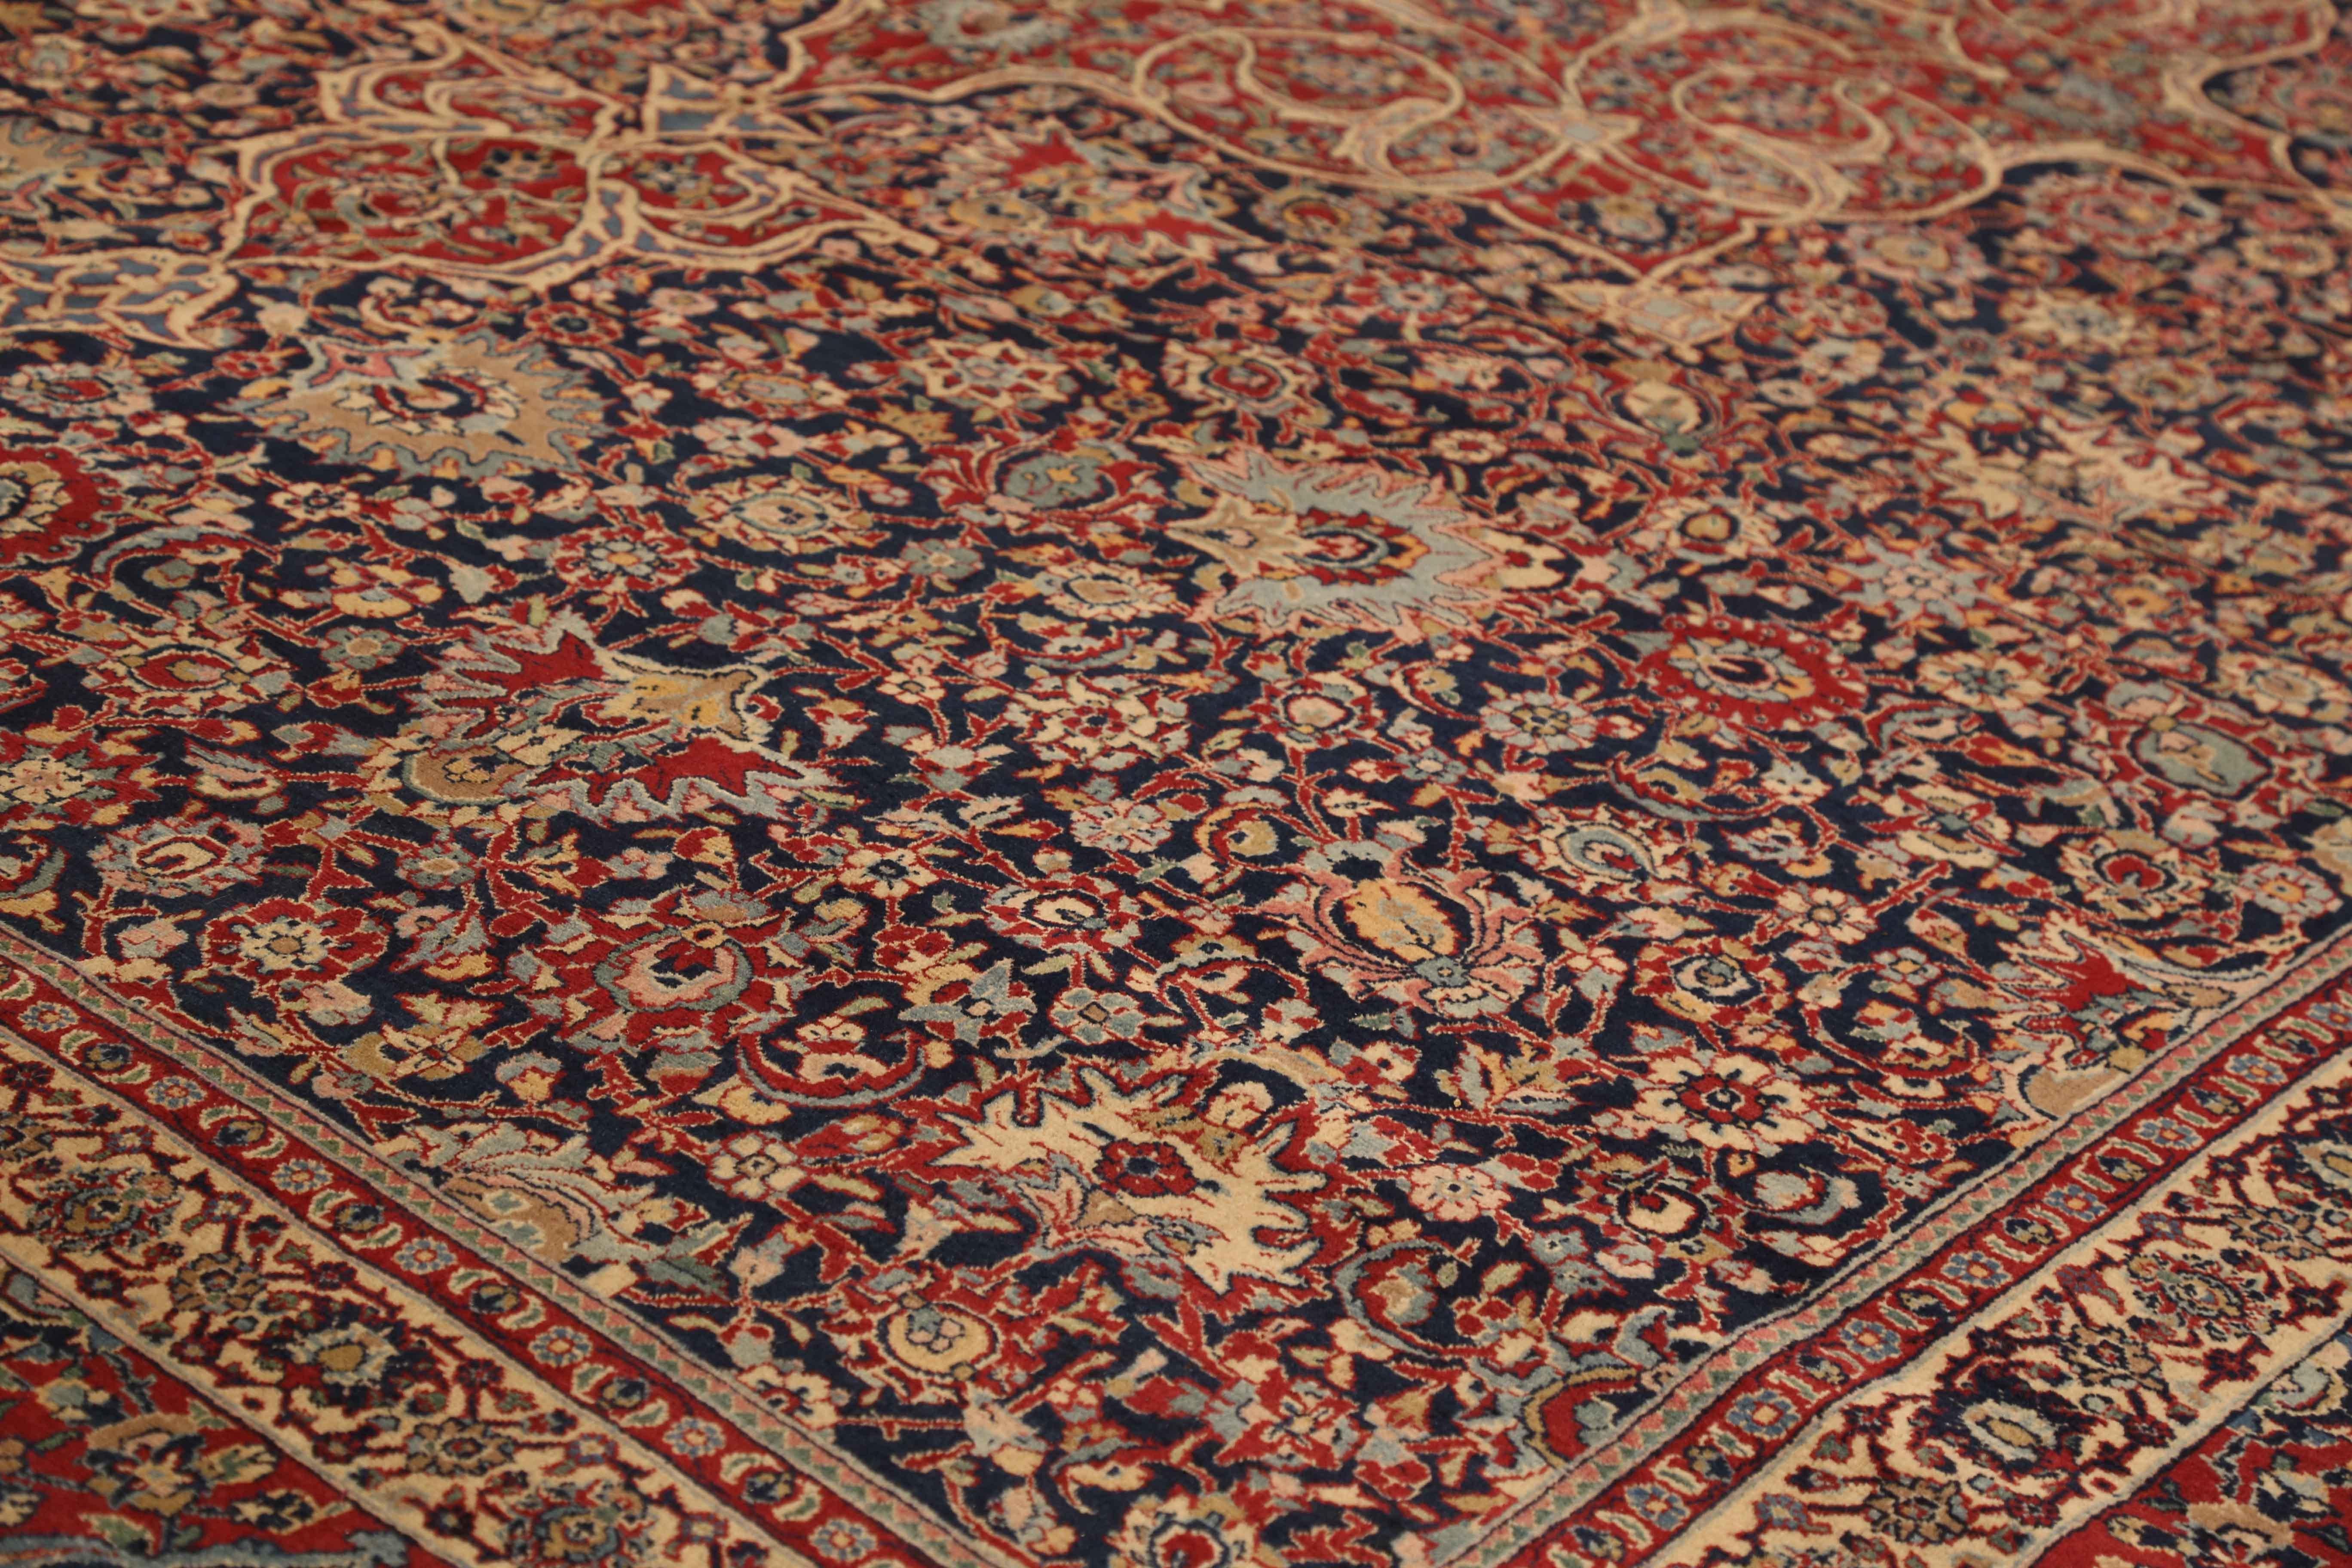 1920s rug patterns